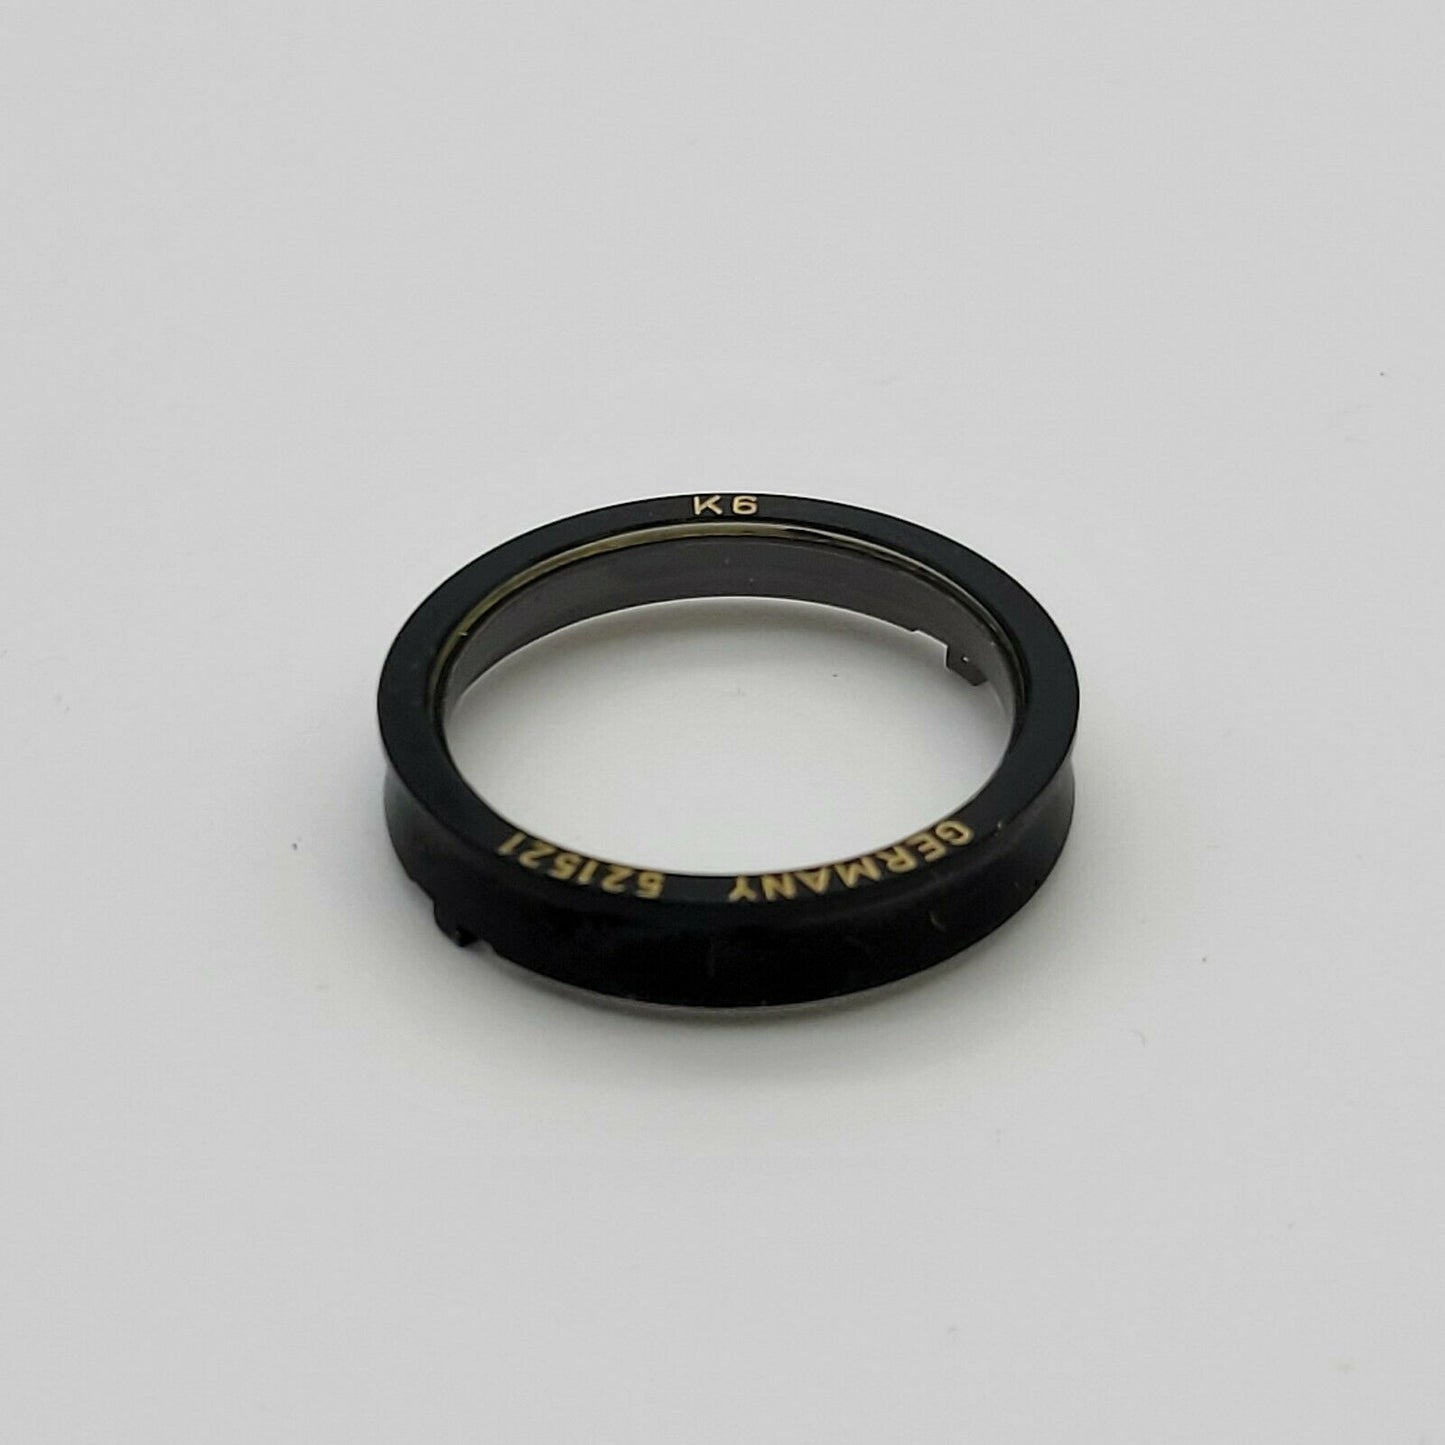 Leica Microscope DIC ICT Condenser K6 Prism 521521 - microscopemarketplace